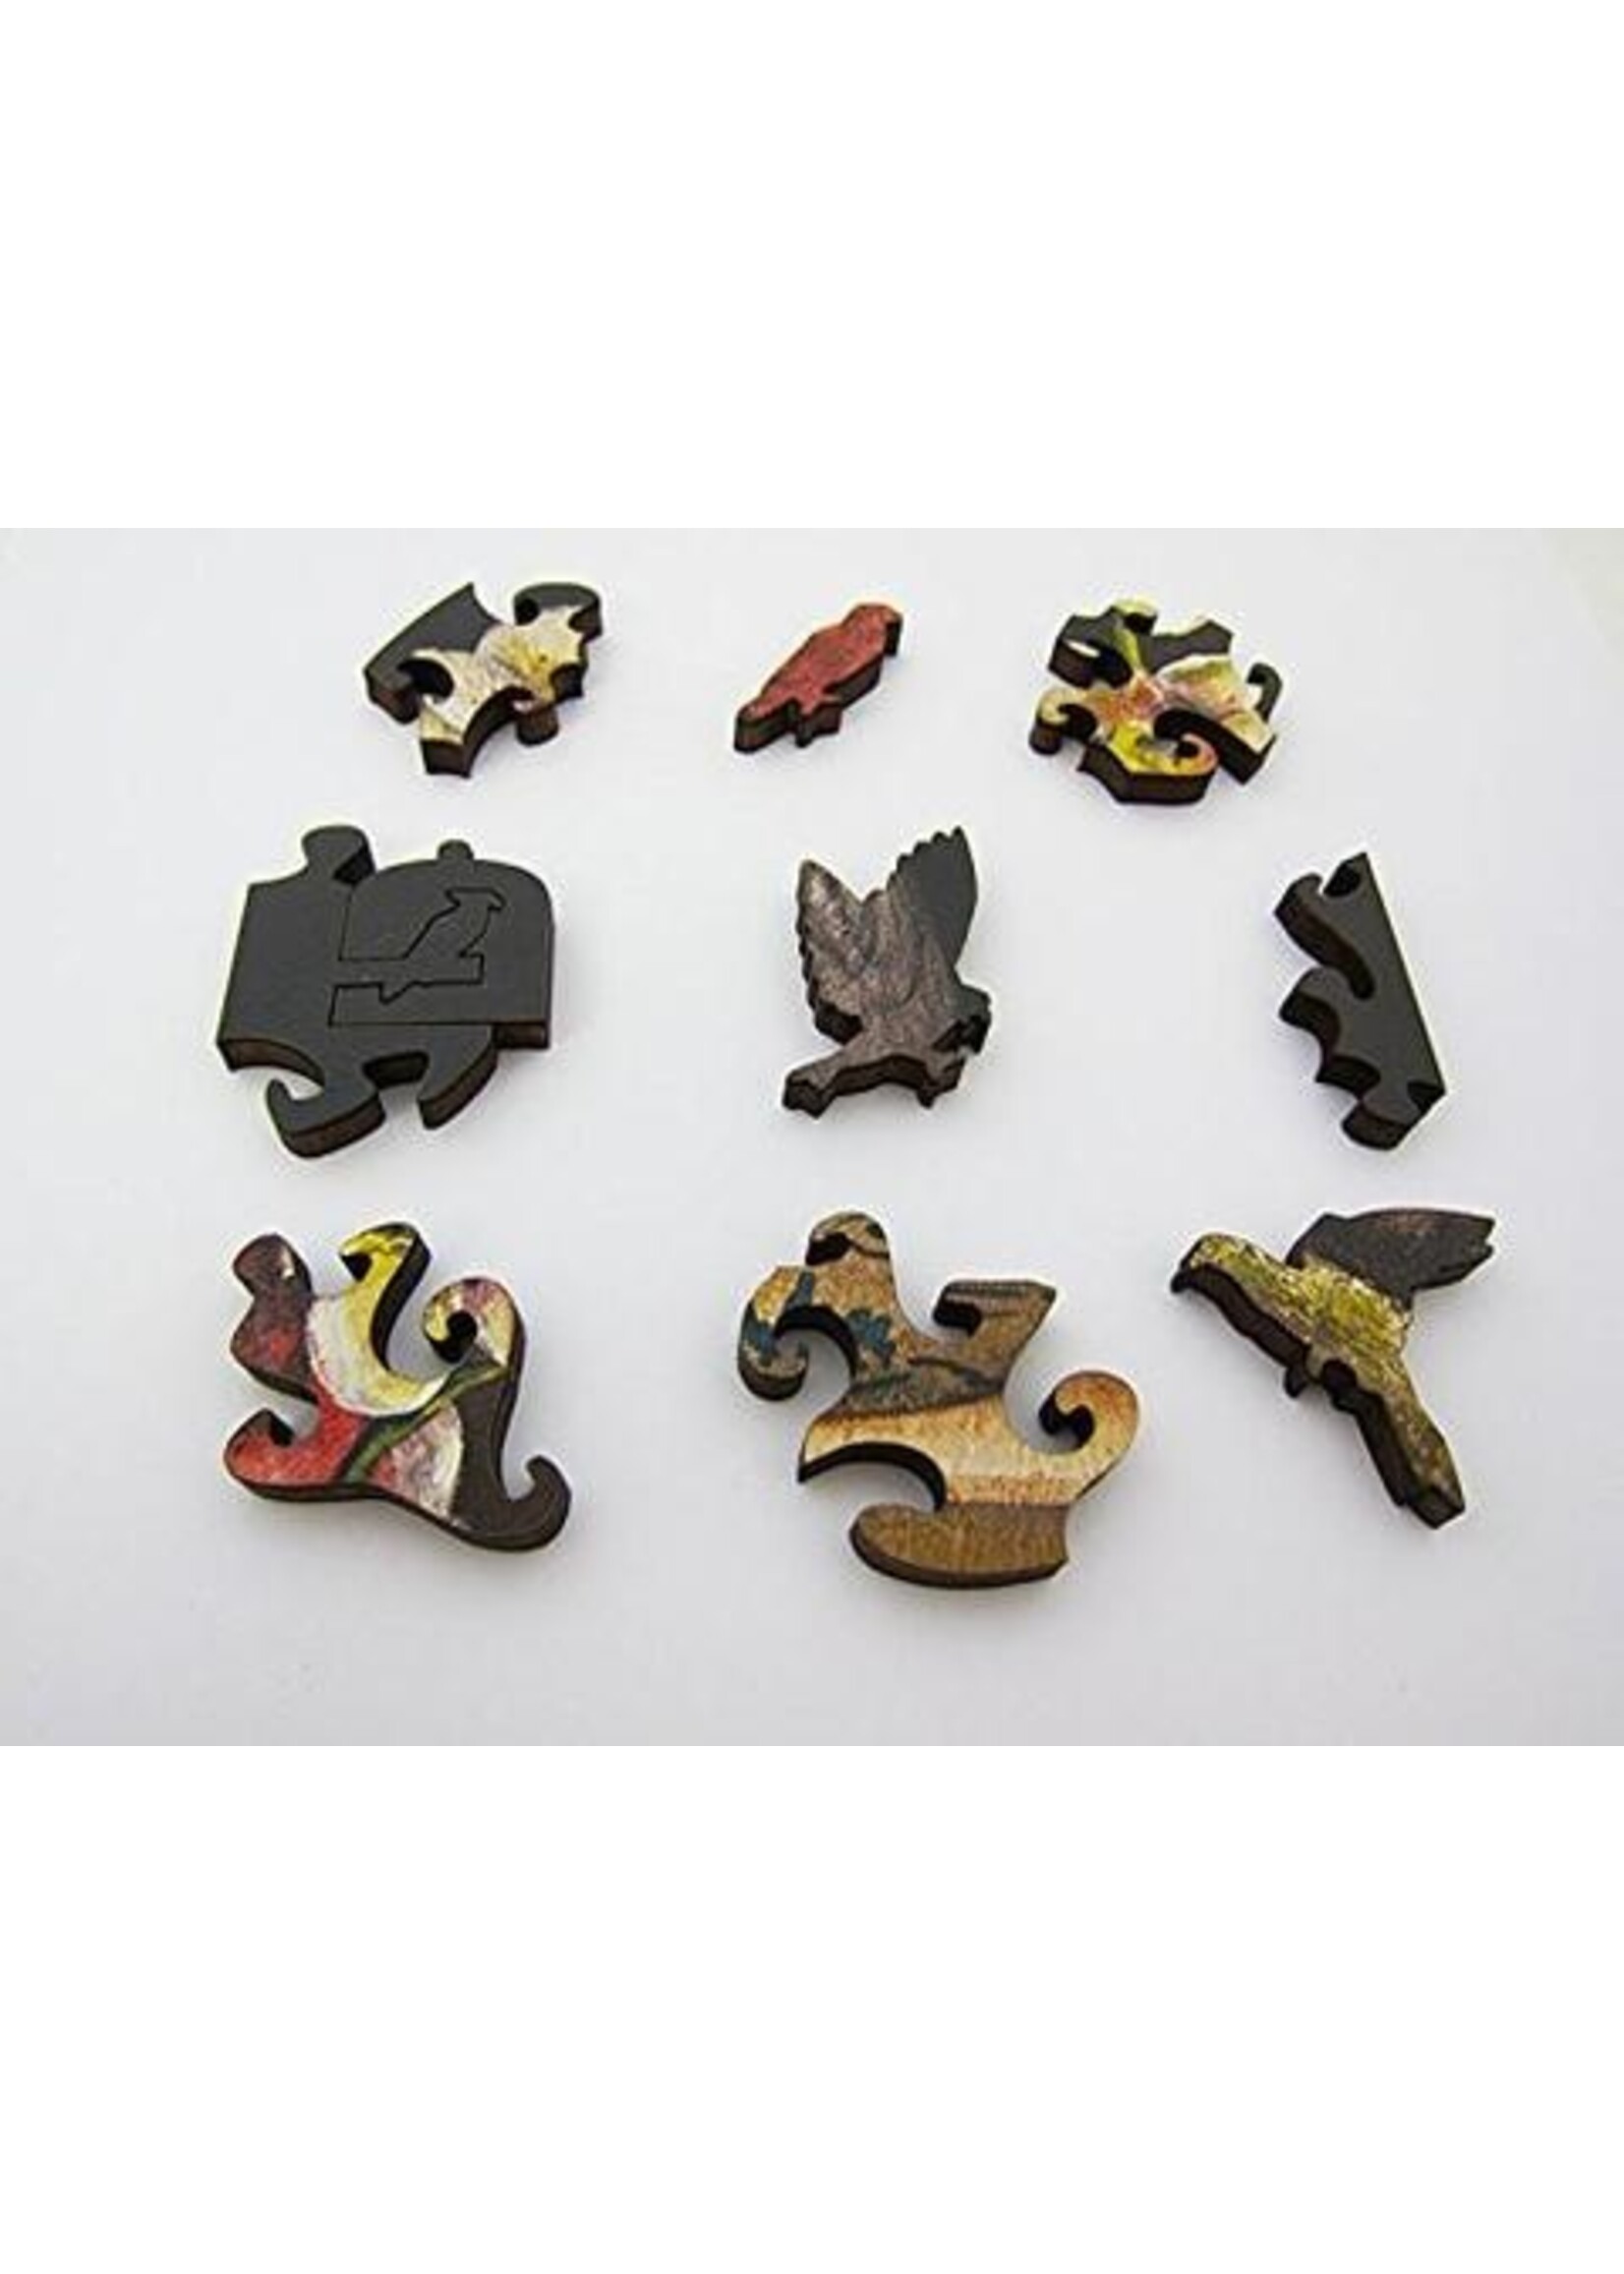 Artifact Puzzles "Naughty Bird" Artifact Wooden Jigsaw Puzzle